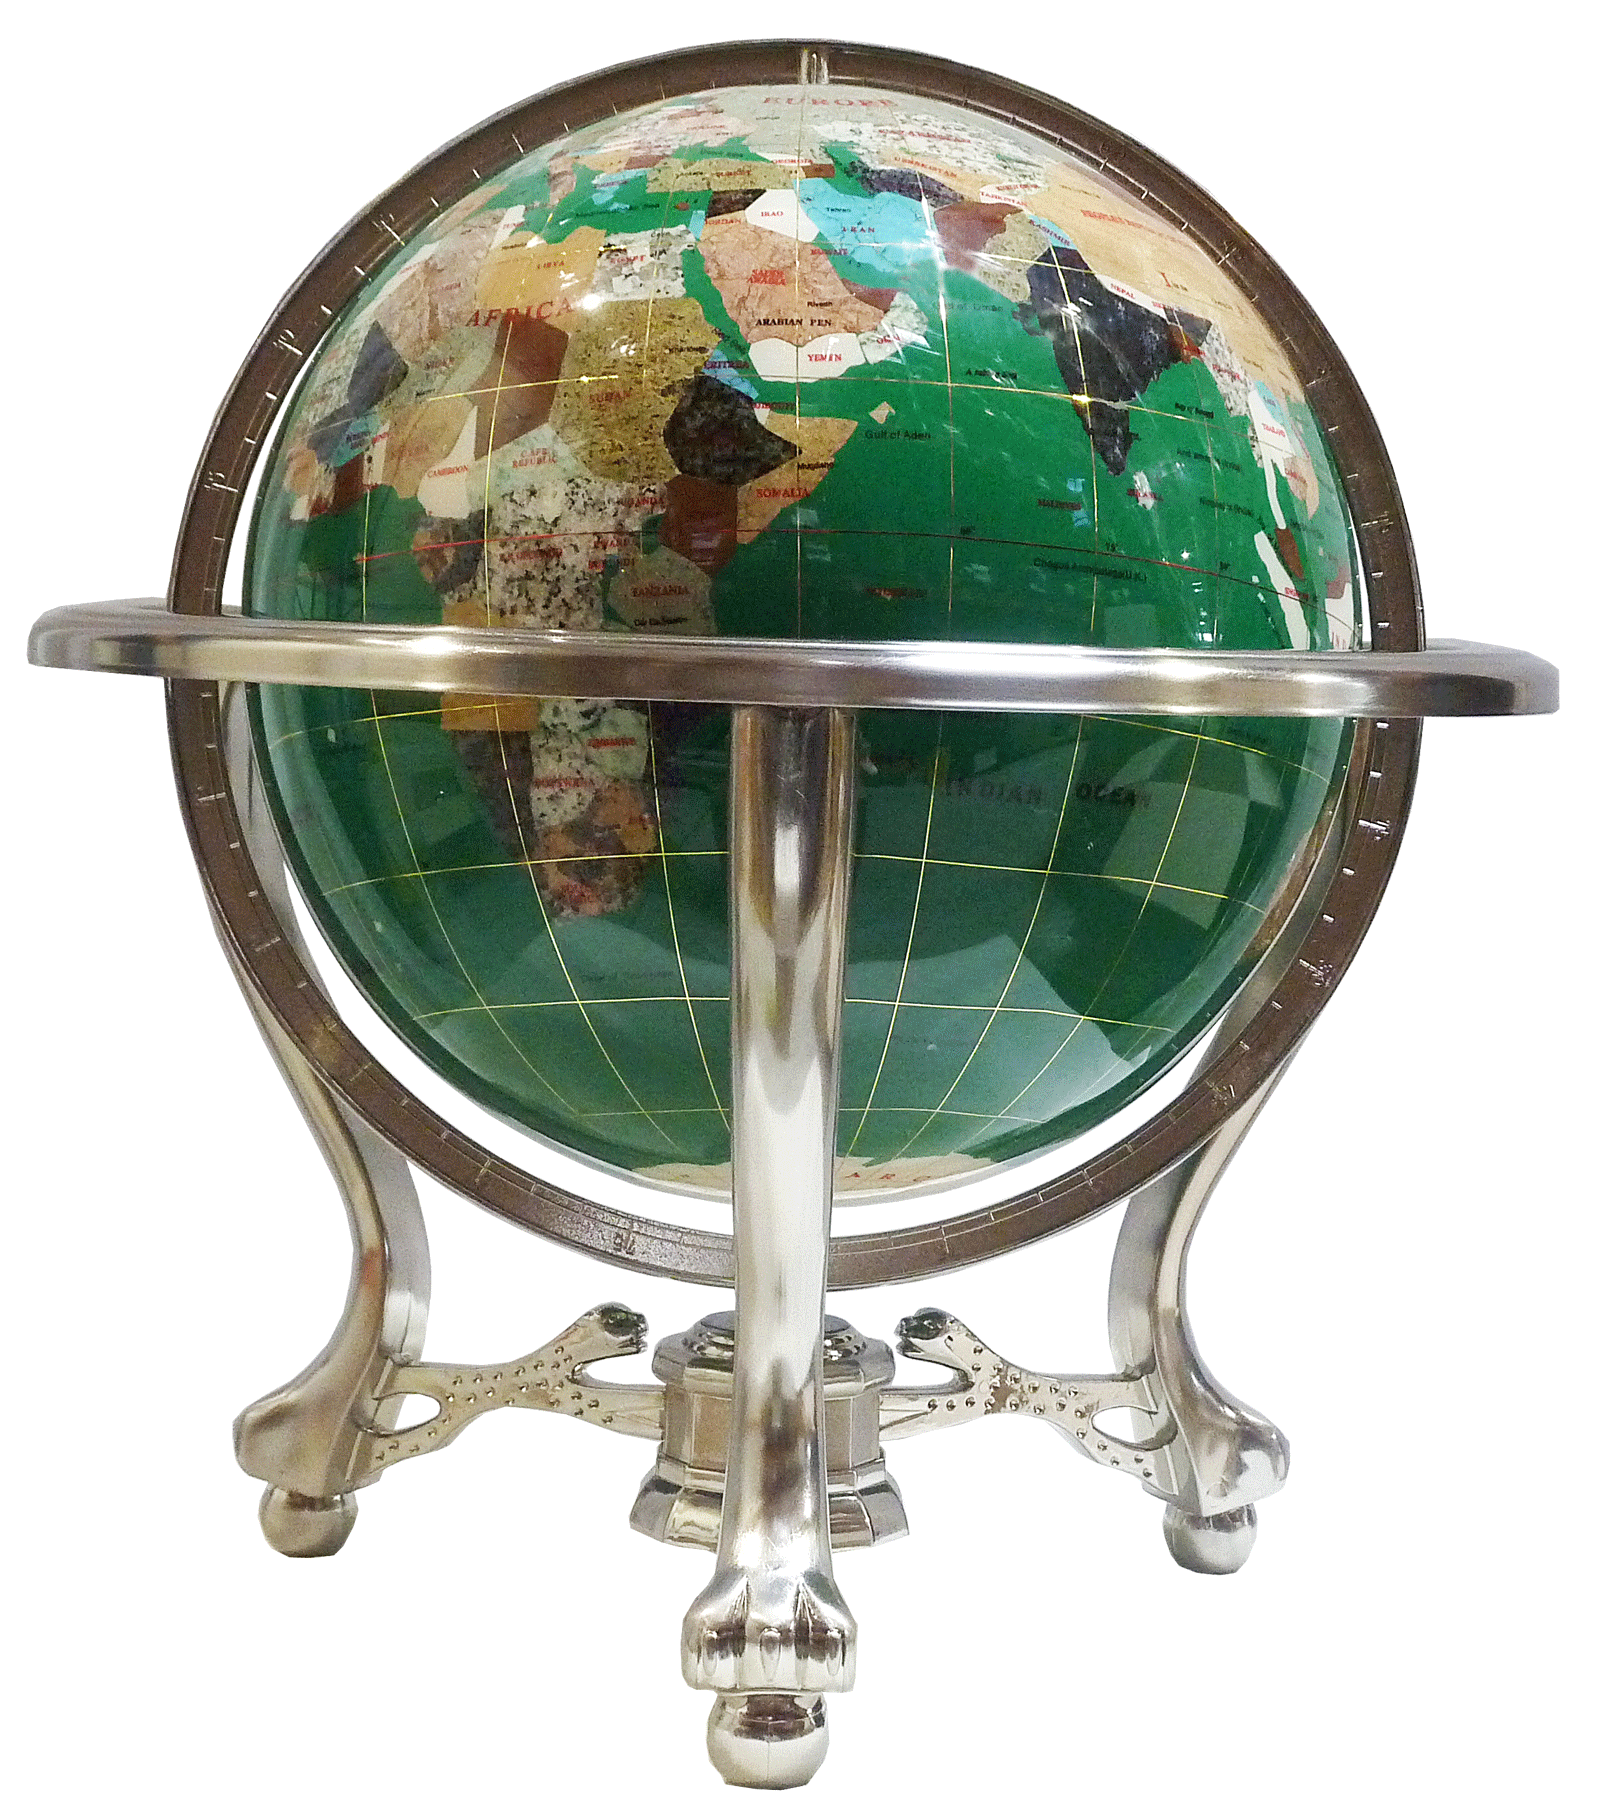 Gemstone globe tabletop 33 cm green 3-leg stand silver finish